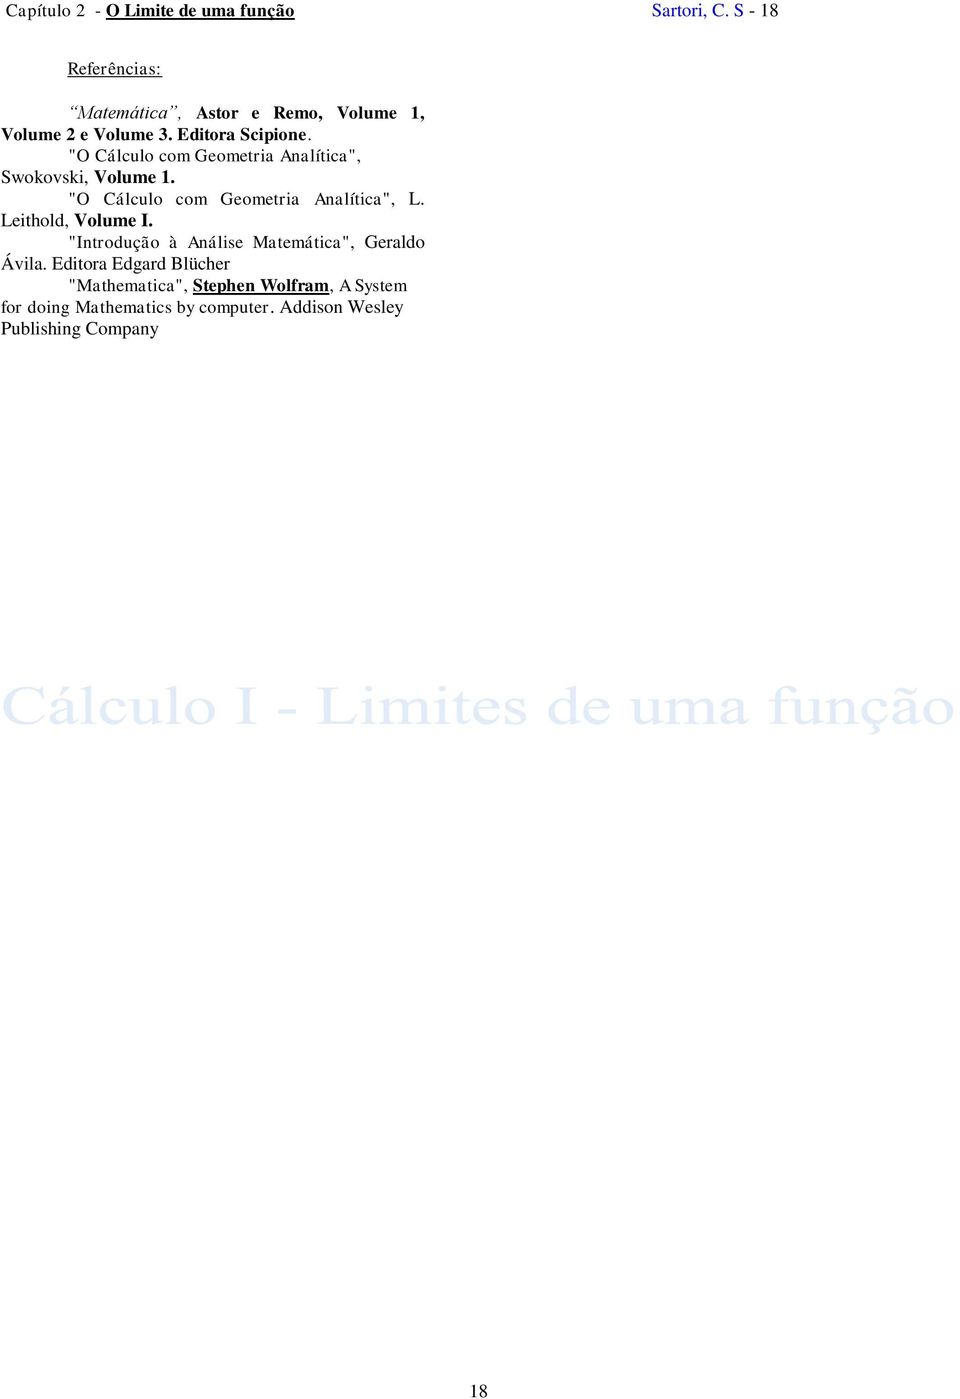 "O Cálculo com Geometri Anlític", Swokovski, Volume. "O Cálculo com Geometri Anlític", L.